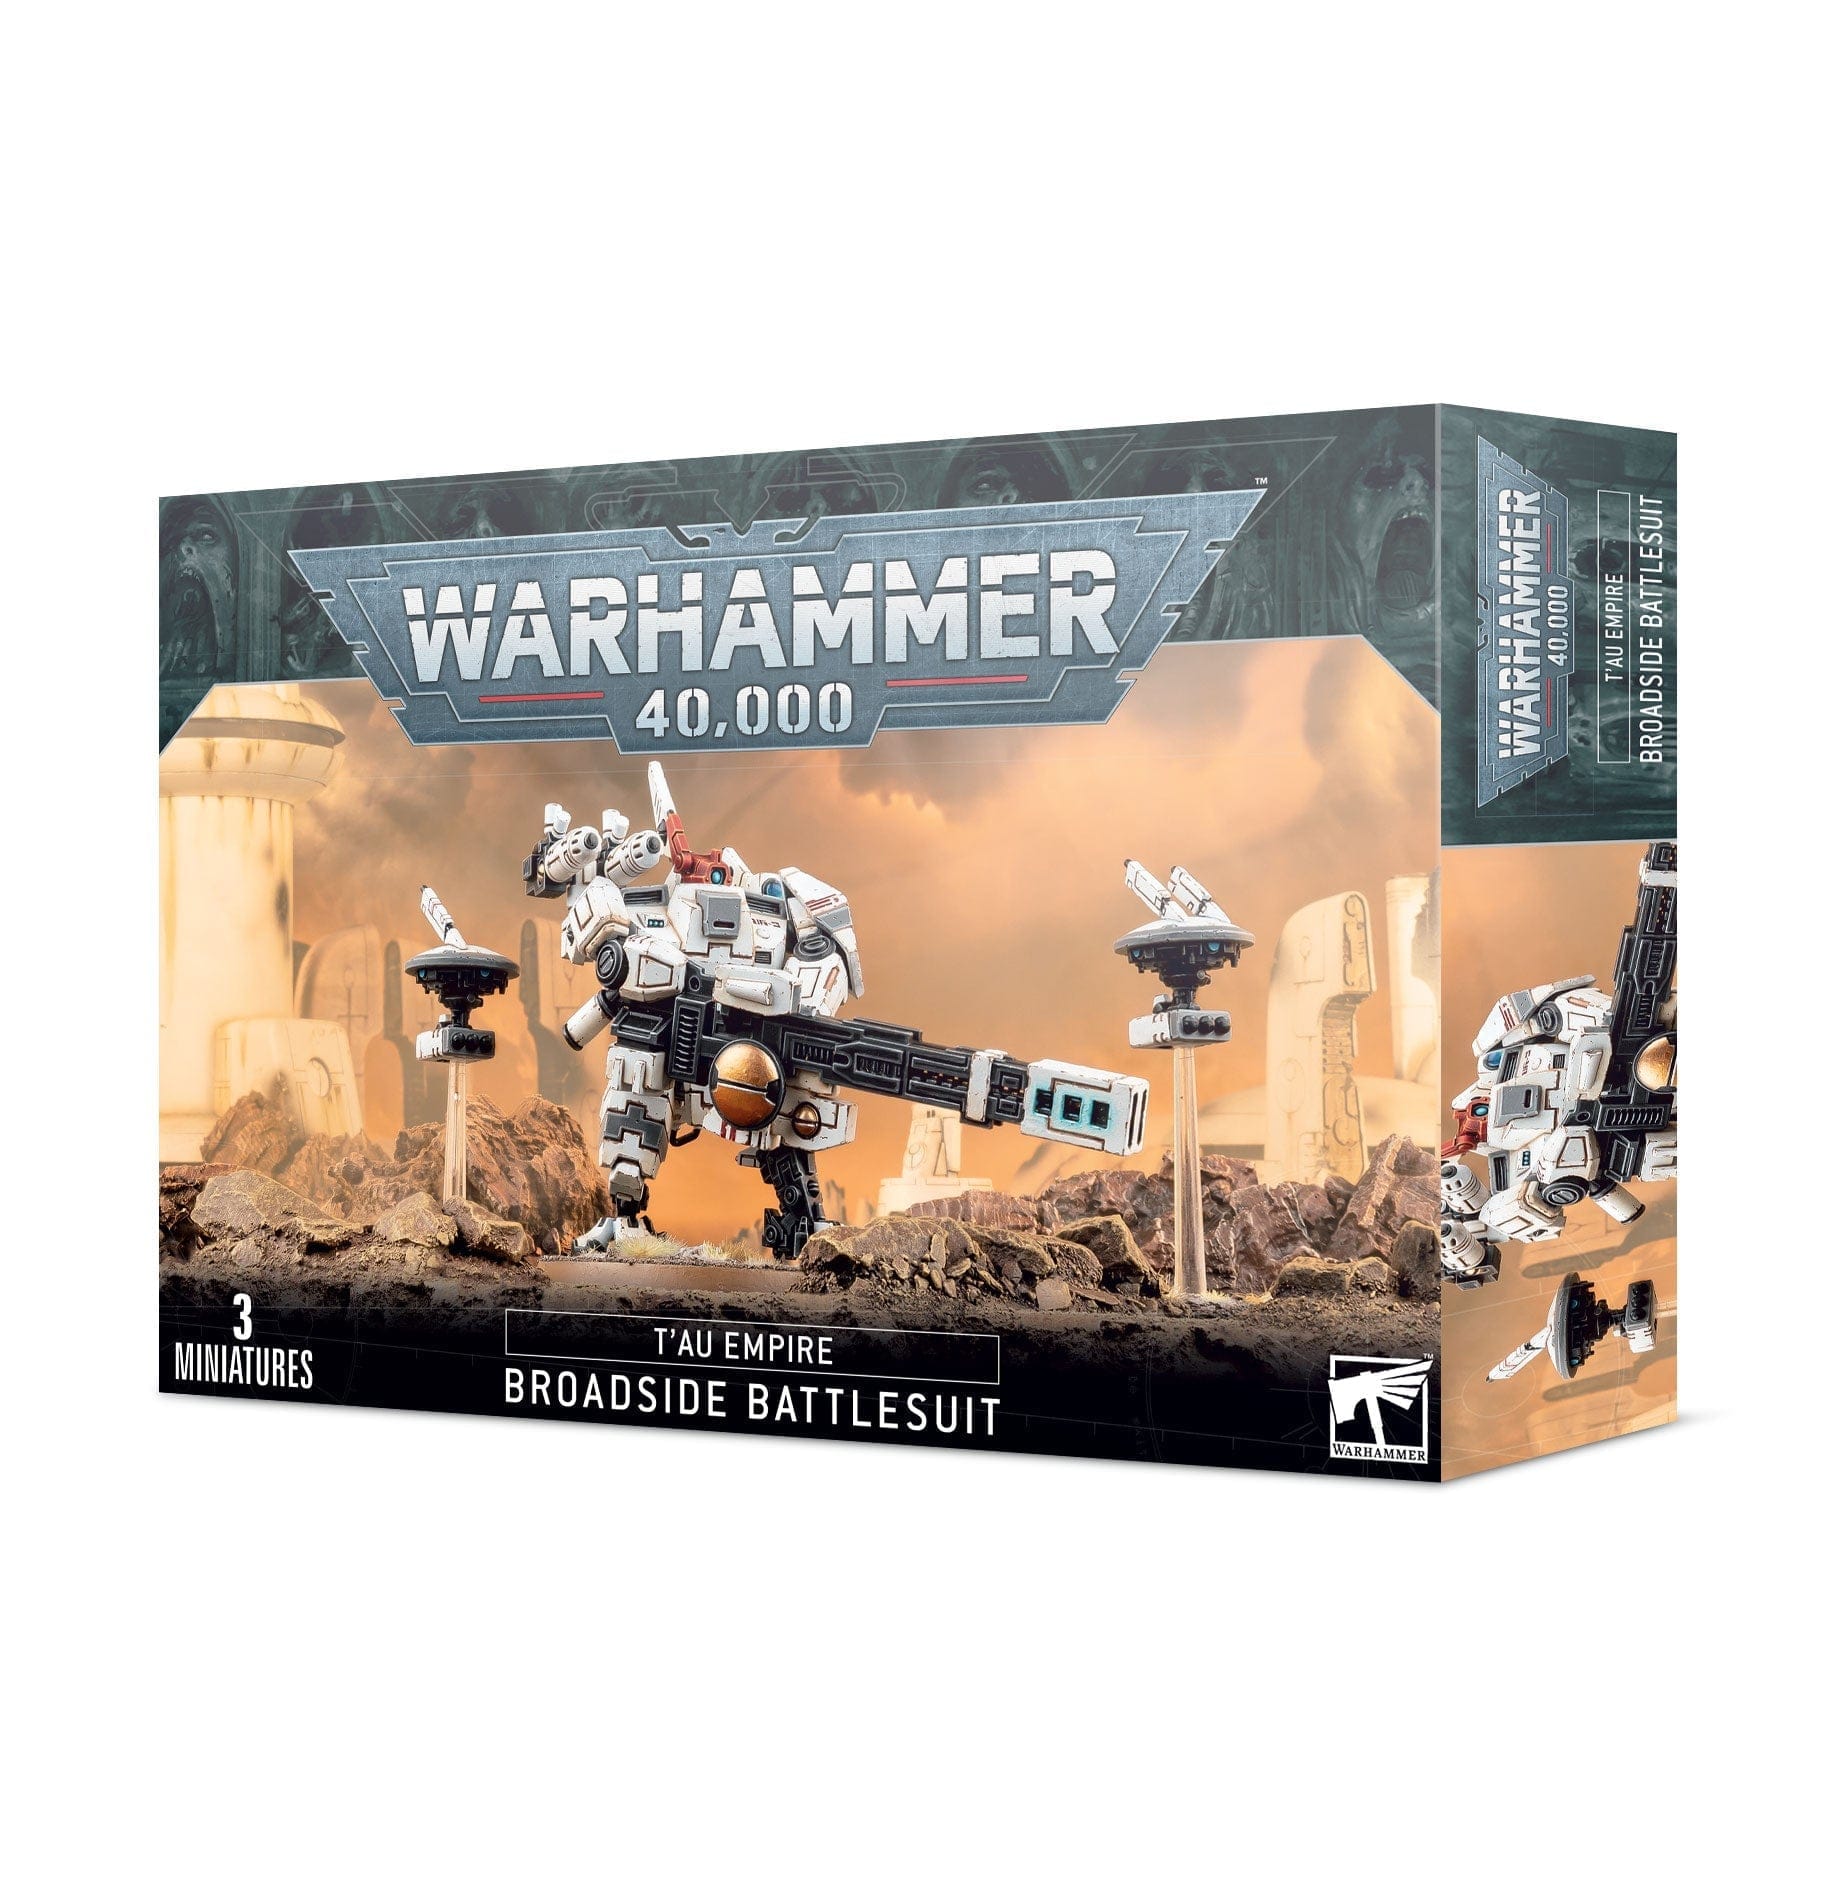 Tau Empire XV88 Broadside Battlesuit Warhammer 40,000 - 